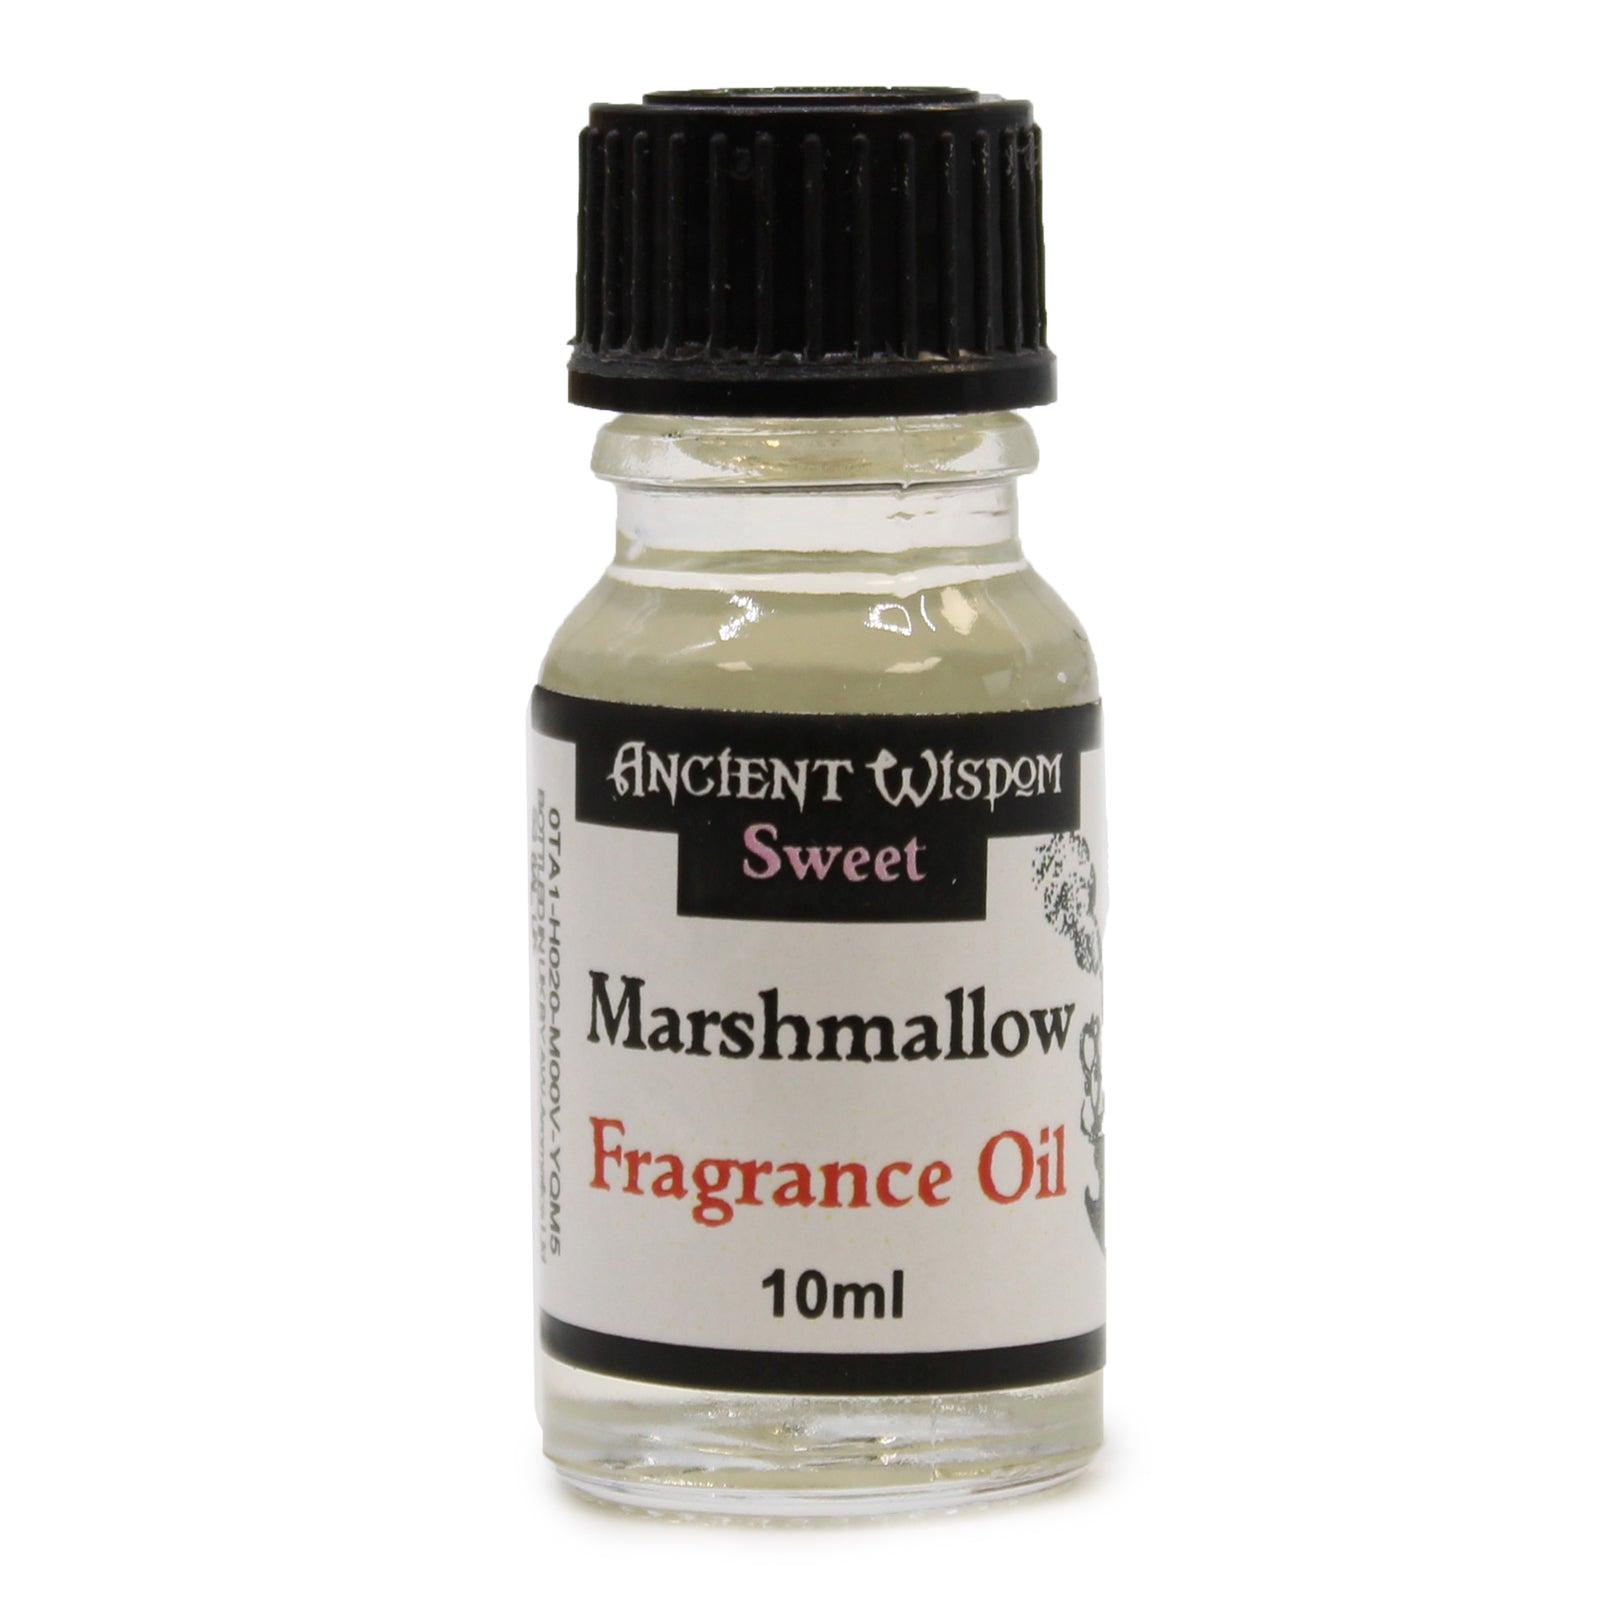 View Marshmallow Fragrance Oil 10ml information